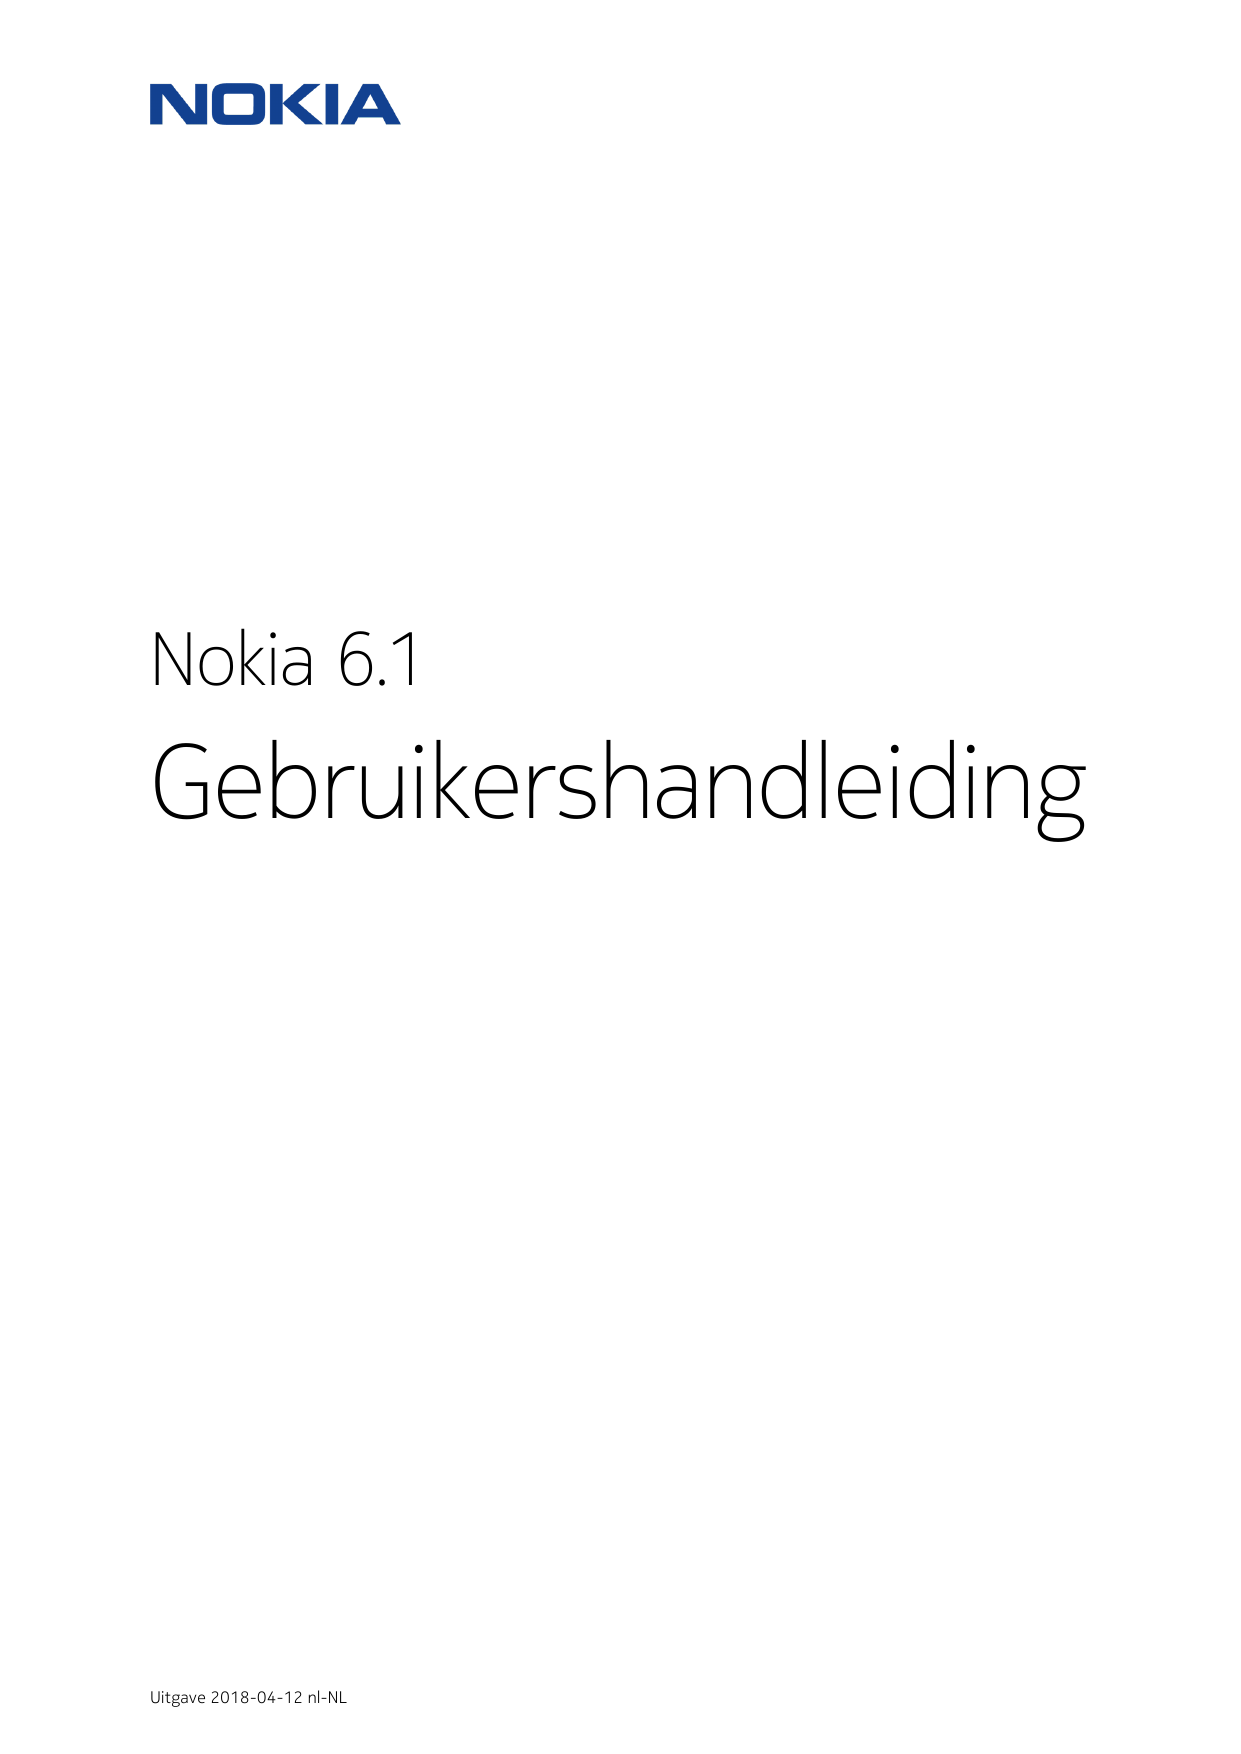 Nokia 6.1GebruikershandleidingUitgave 2018-04-12 nl-NL